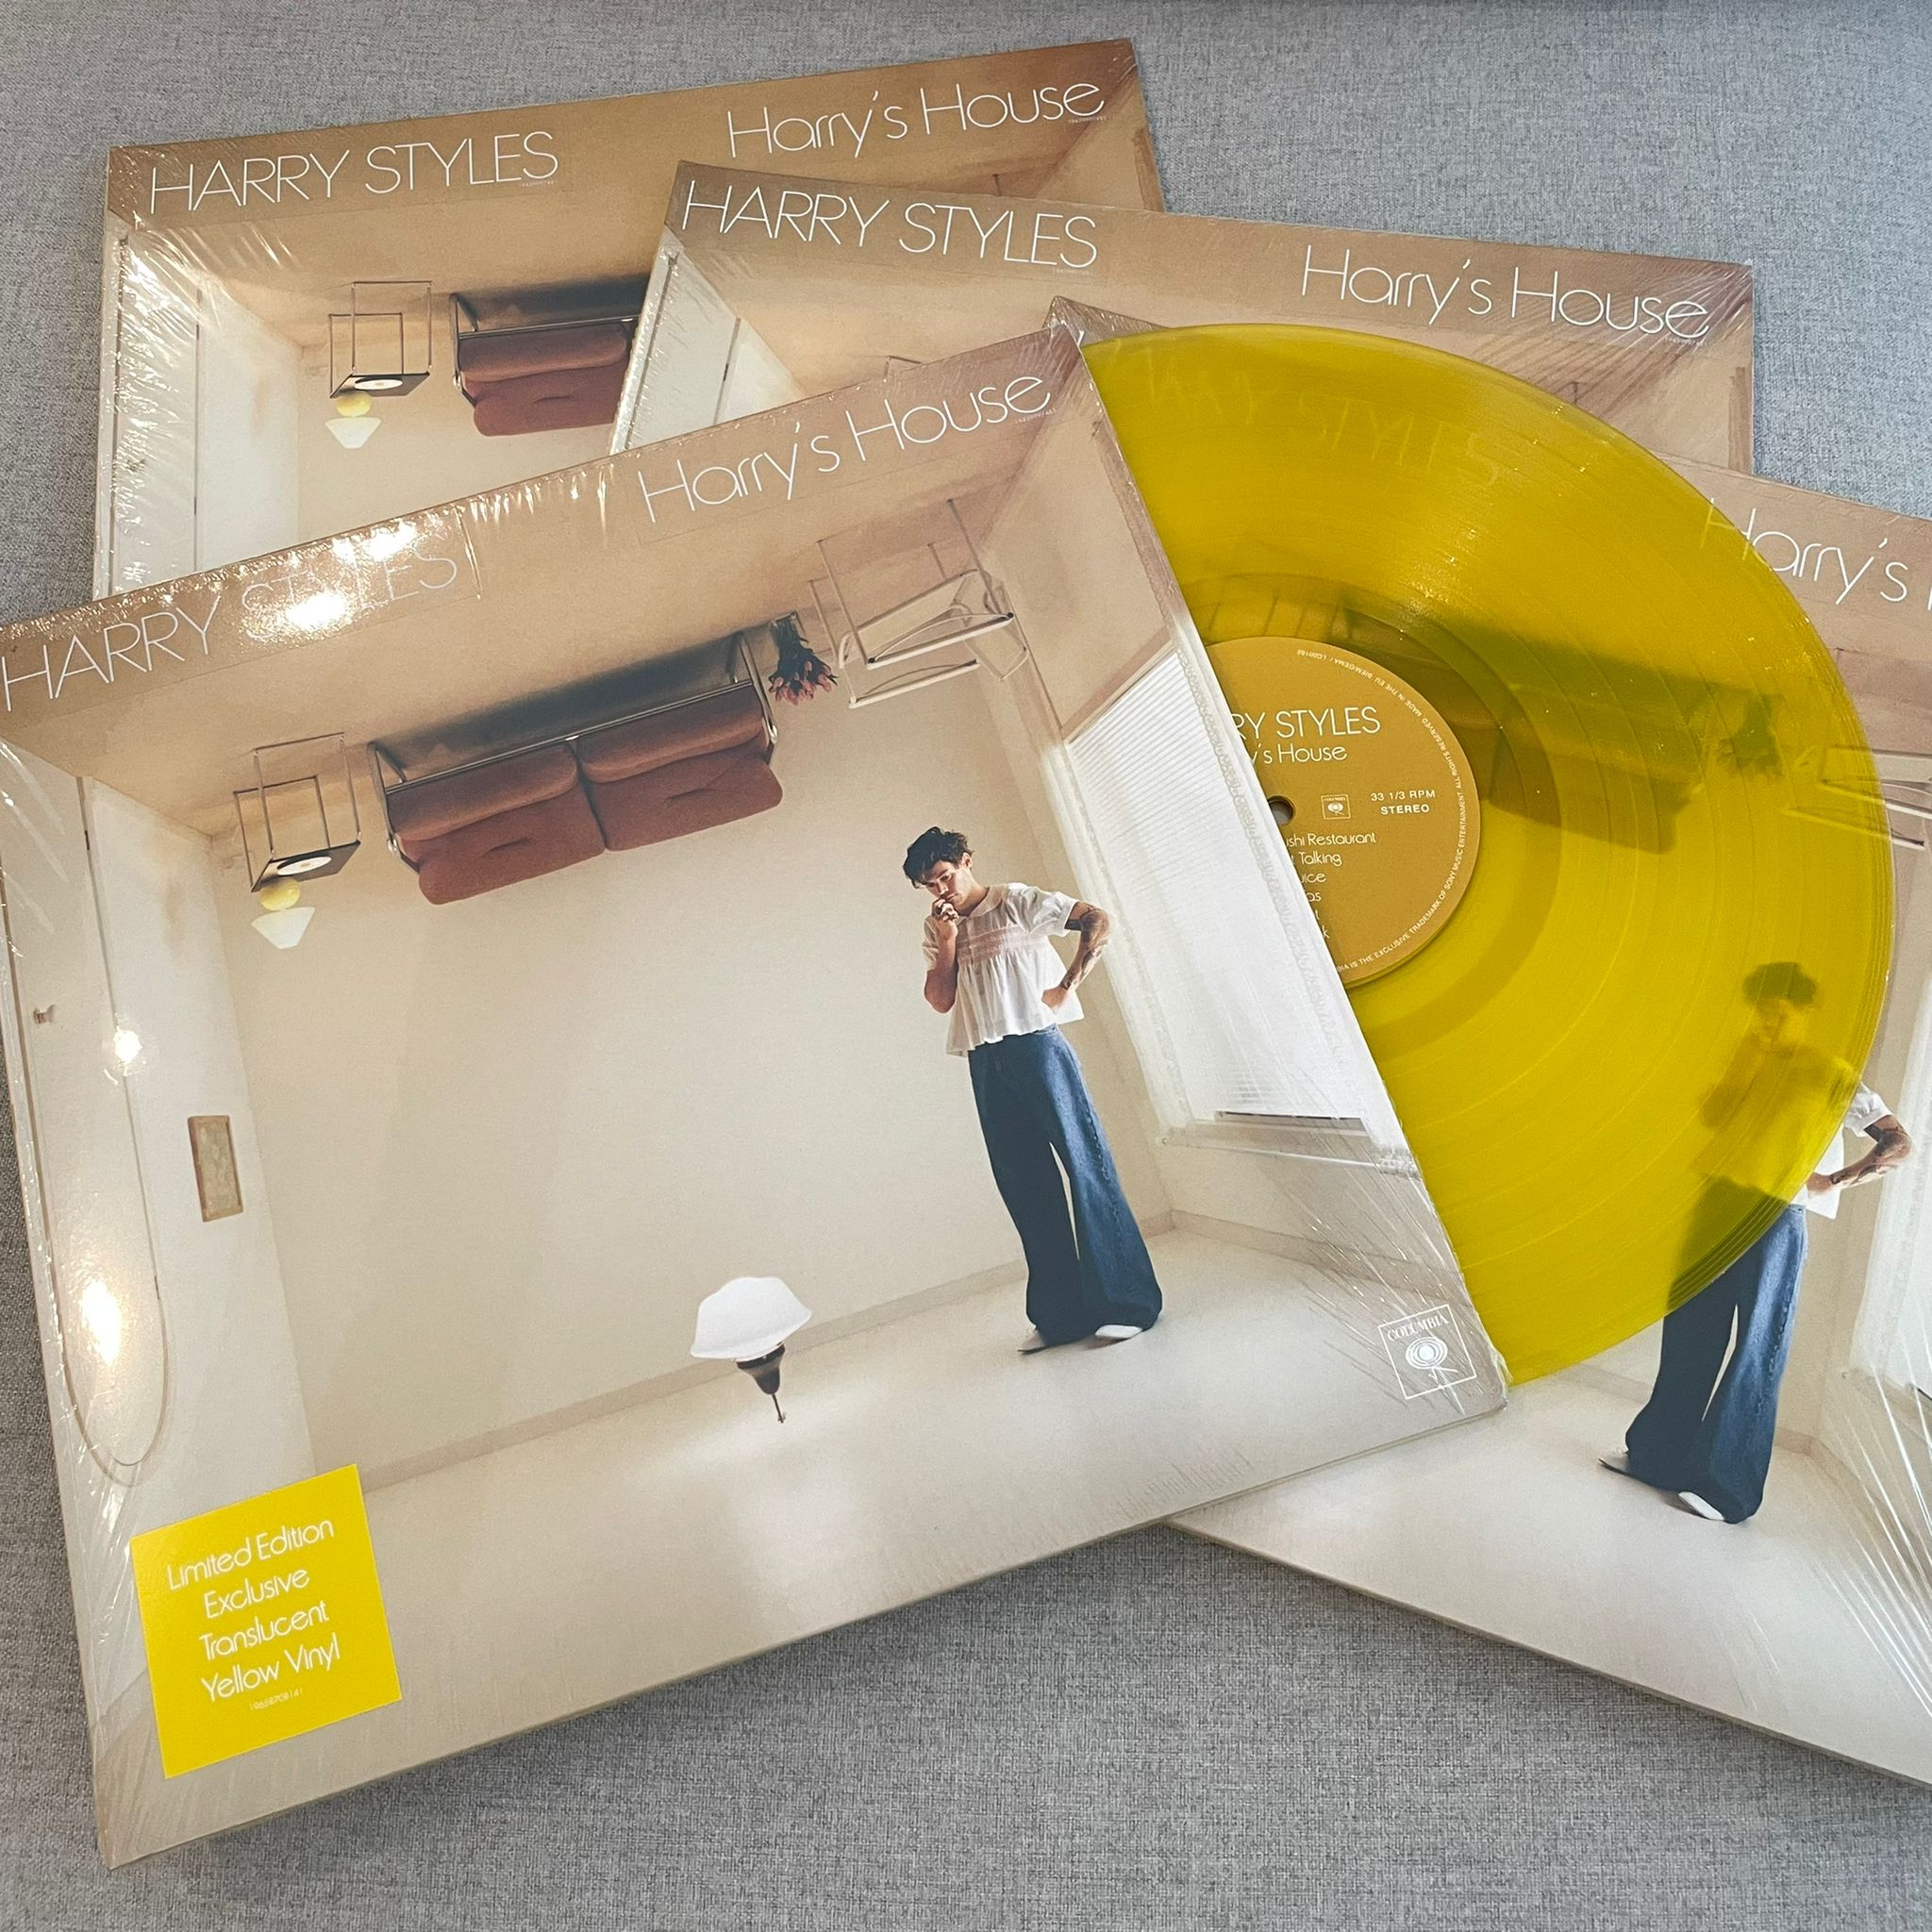 – Harry's House (Ltd Yellow Vinyl LP) –